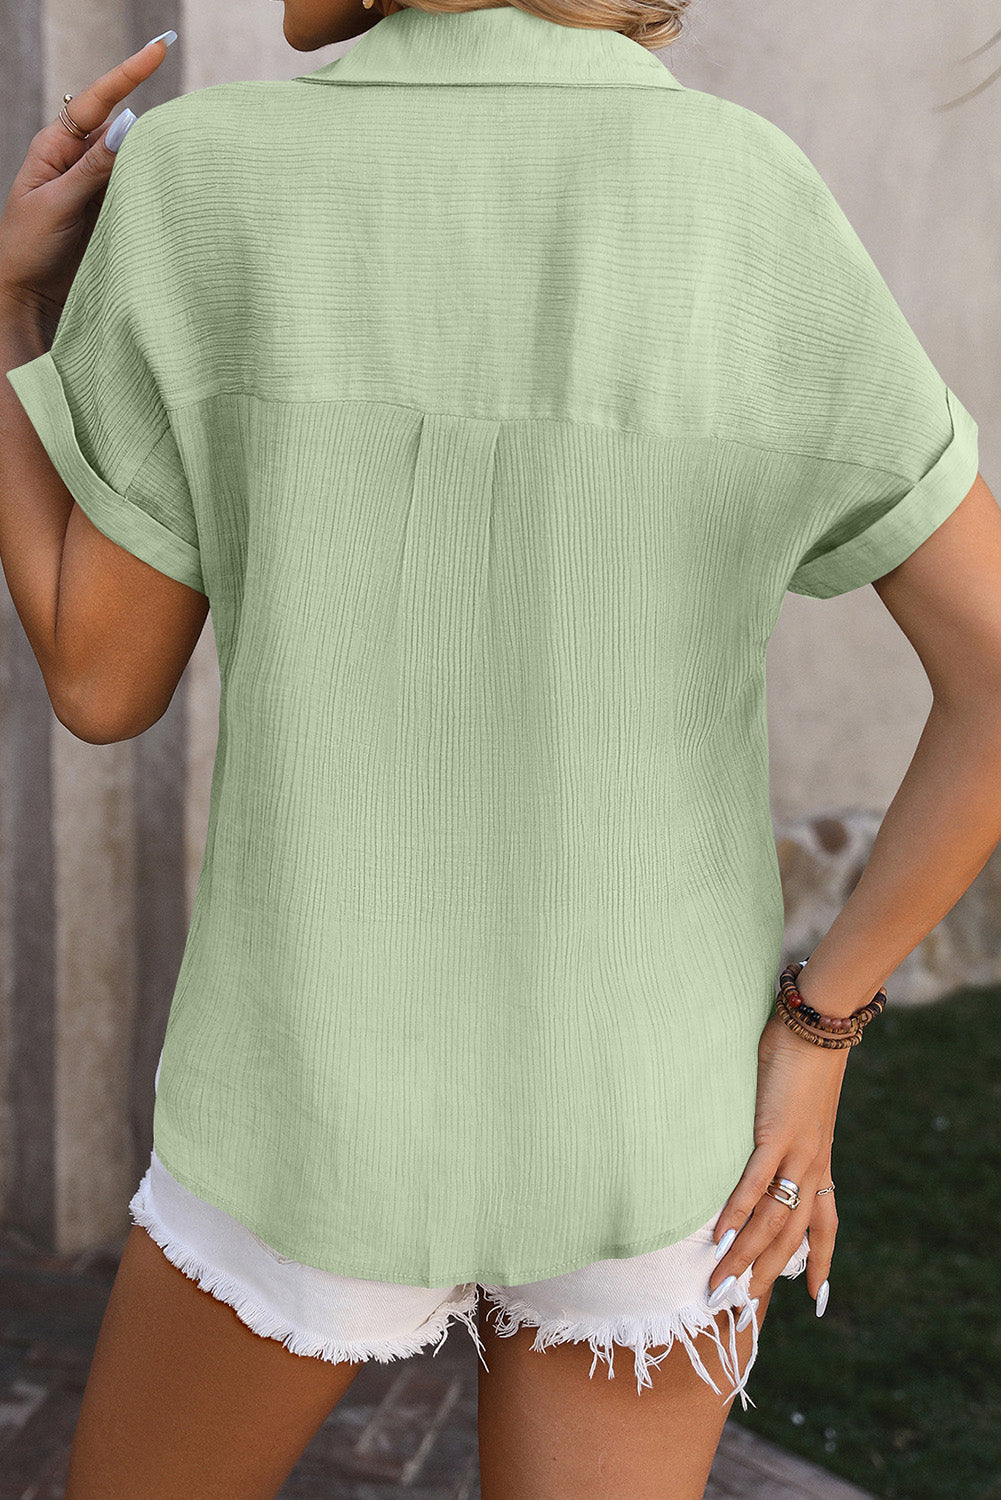 Clearly Aqua Crinkle Textured Cuffed Short Sleeve Shirt